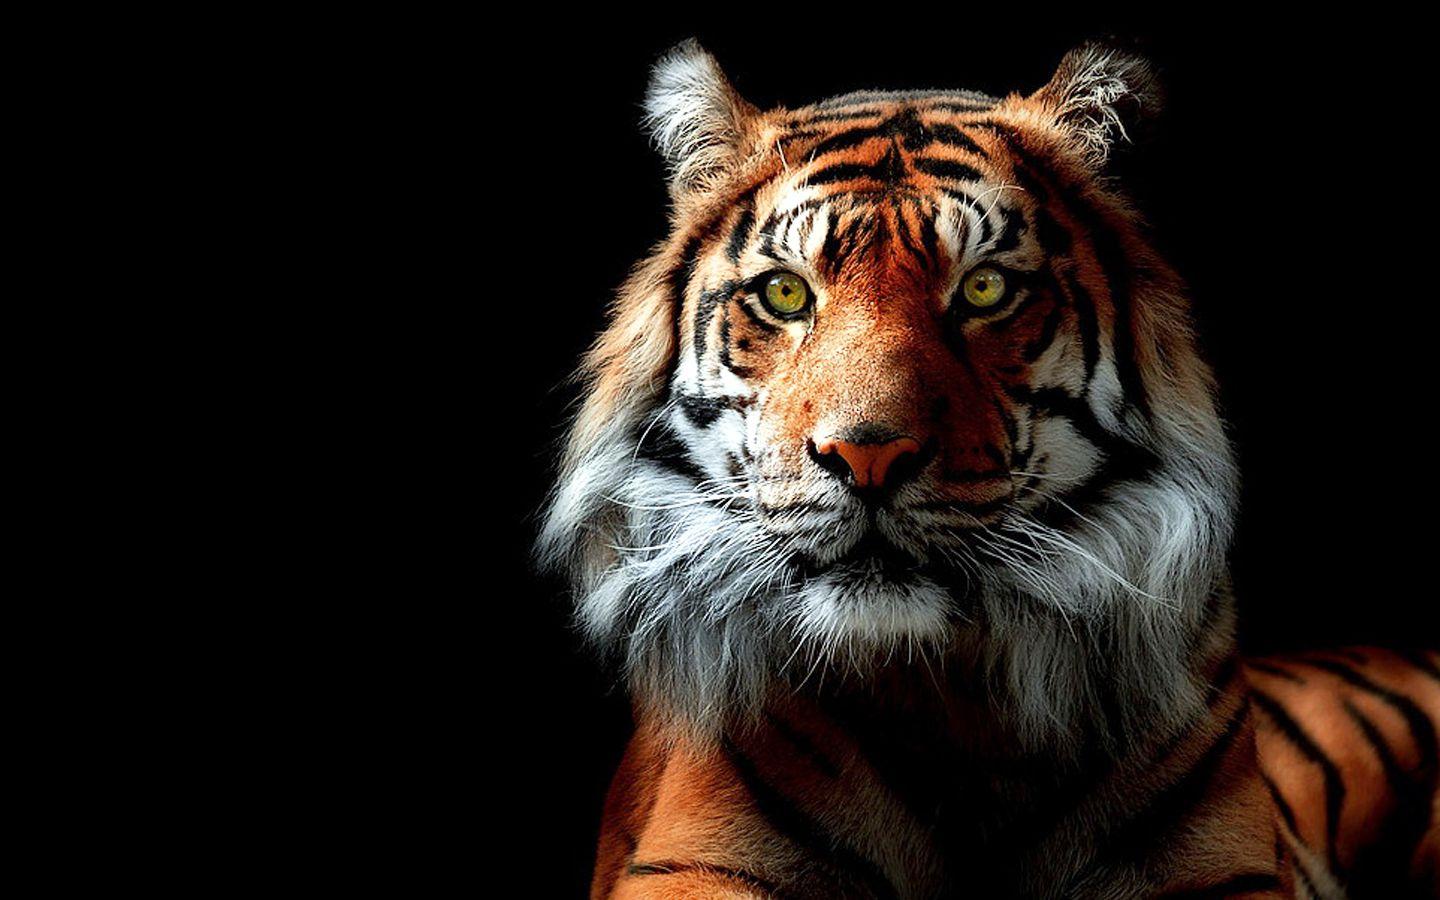 Tiger Image Wallpaper